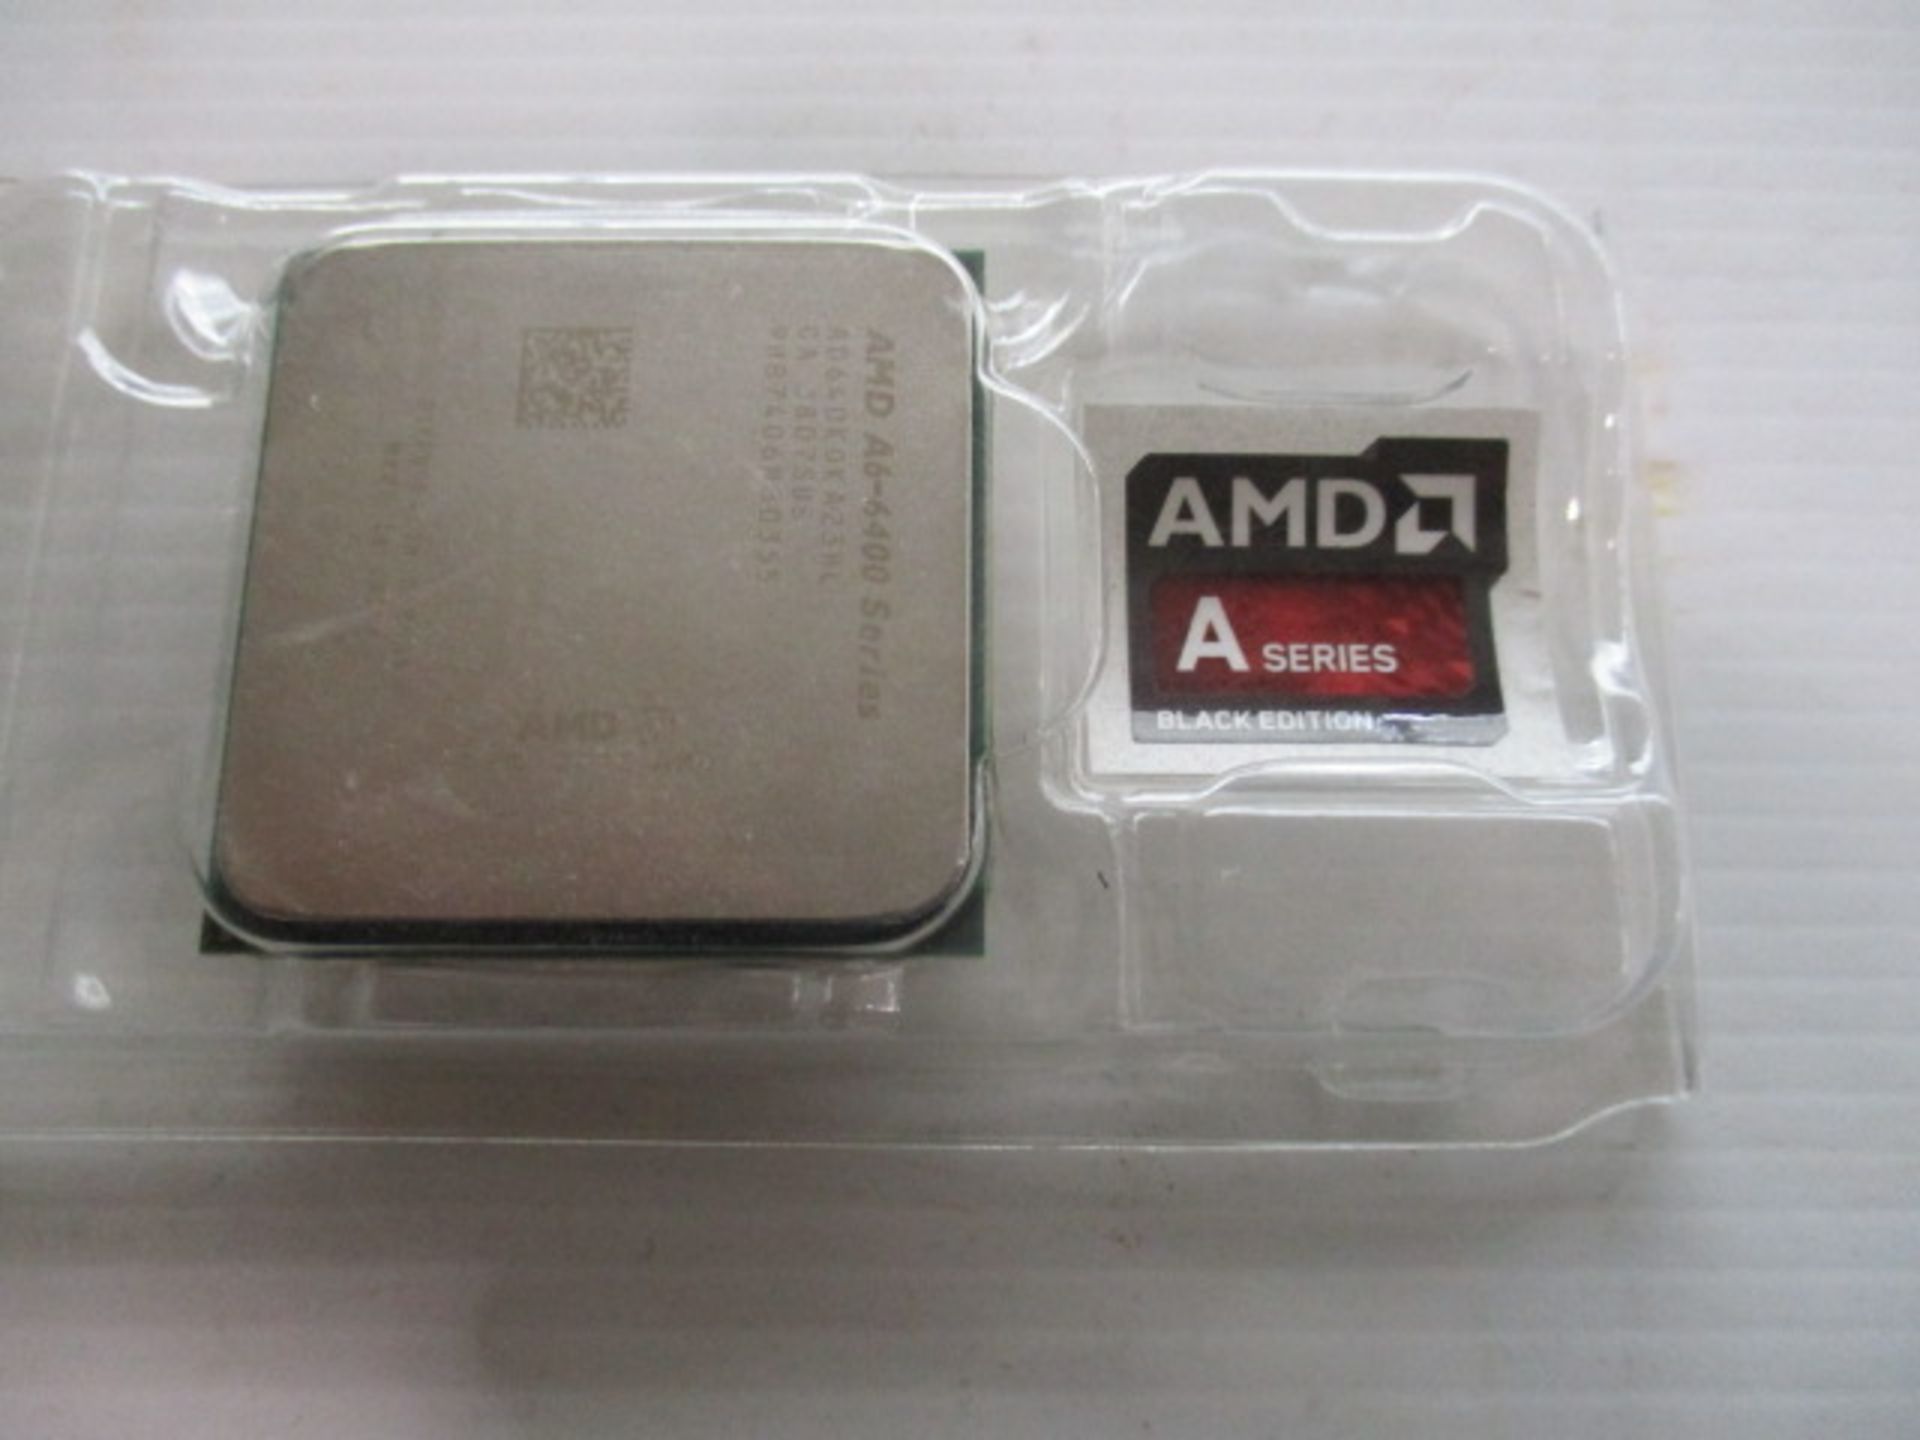 AMD A series processor chip